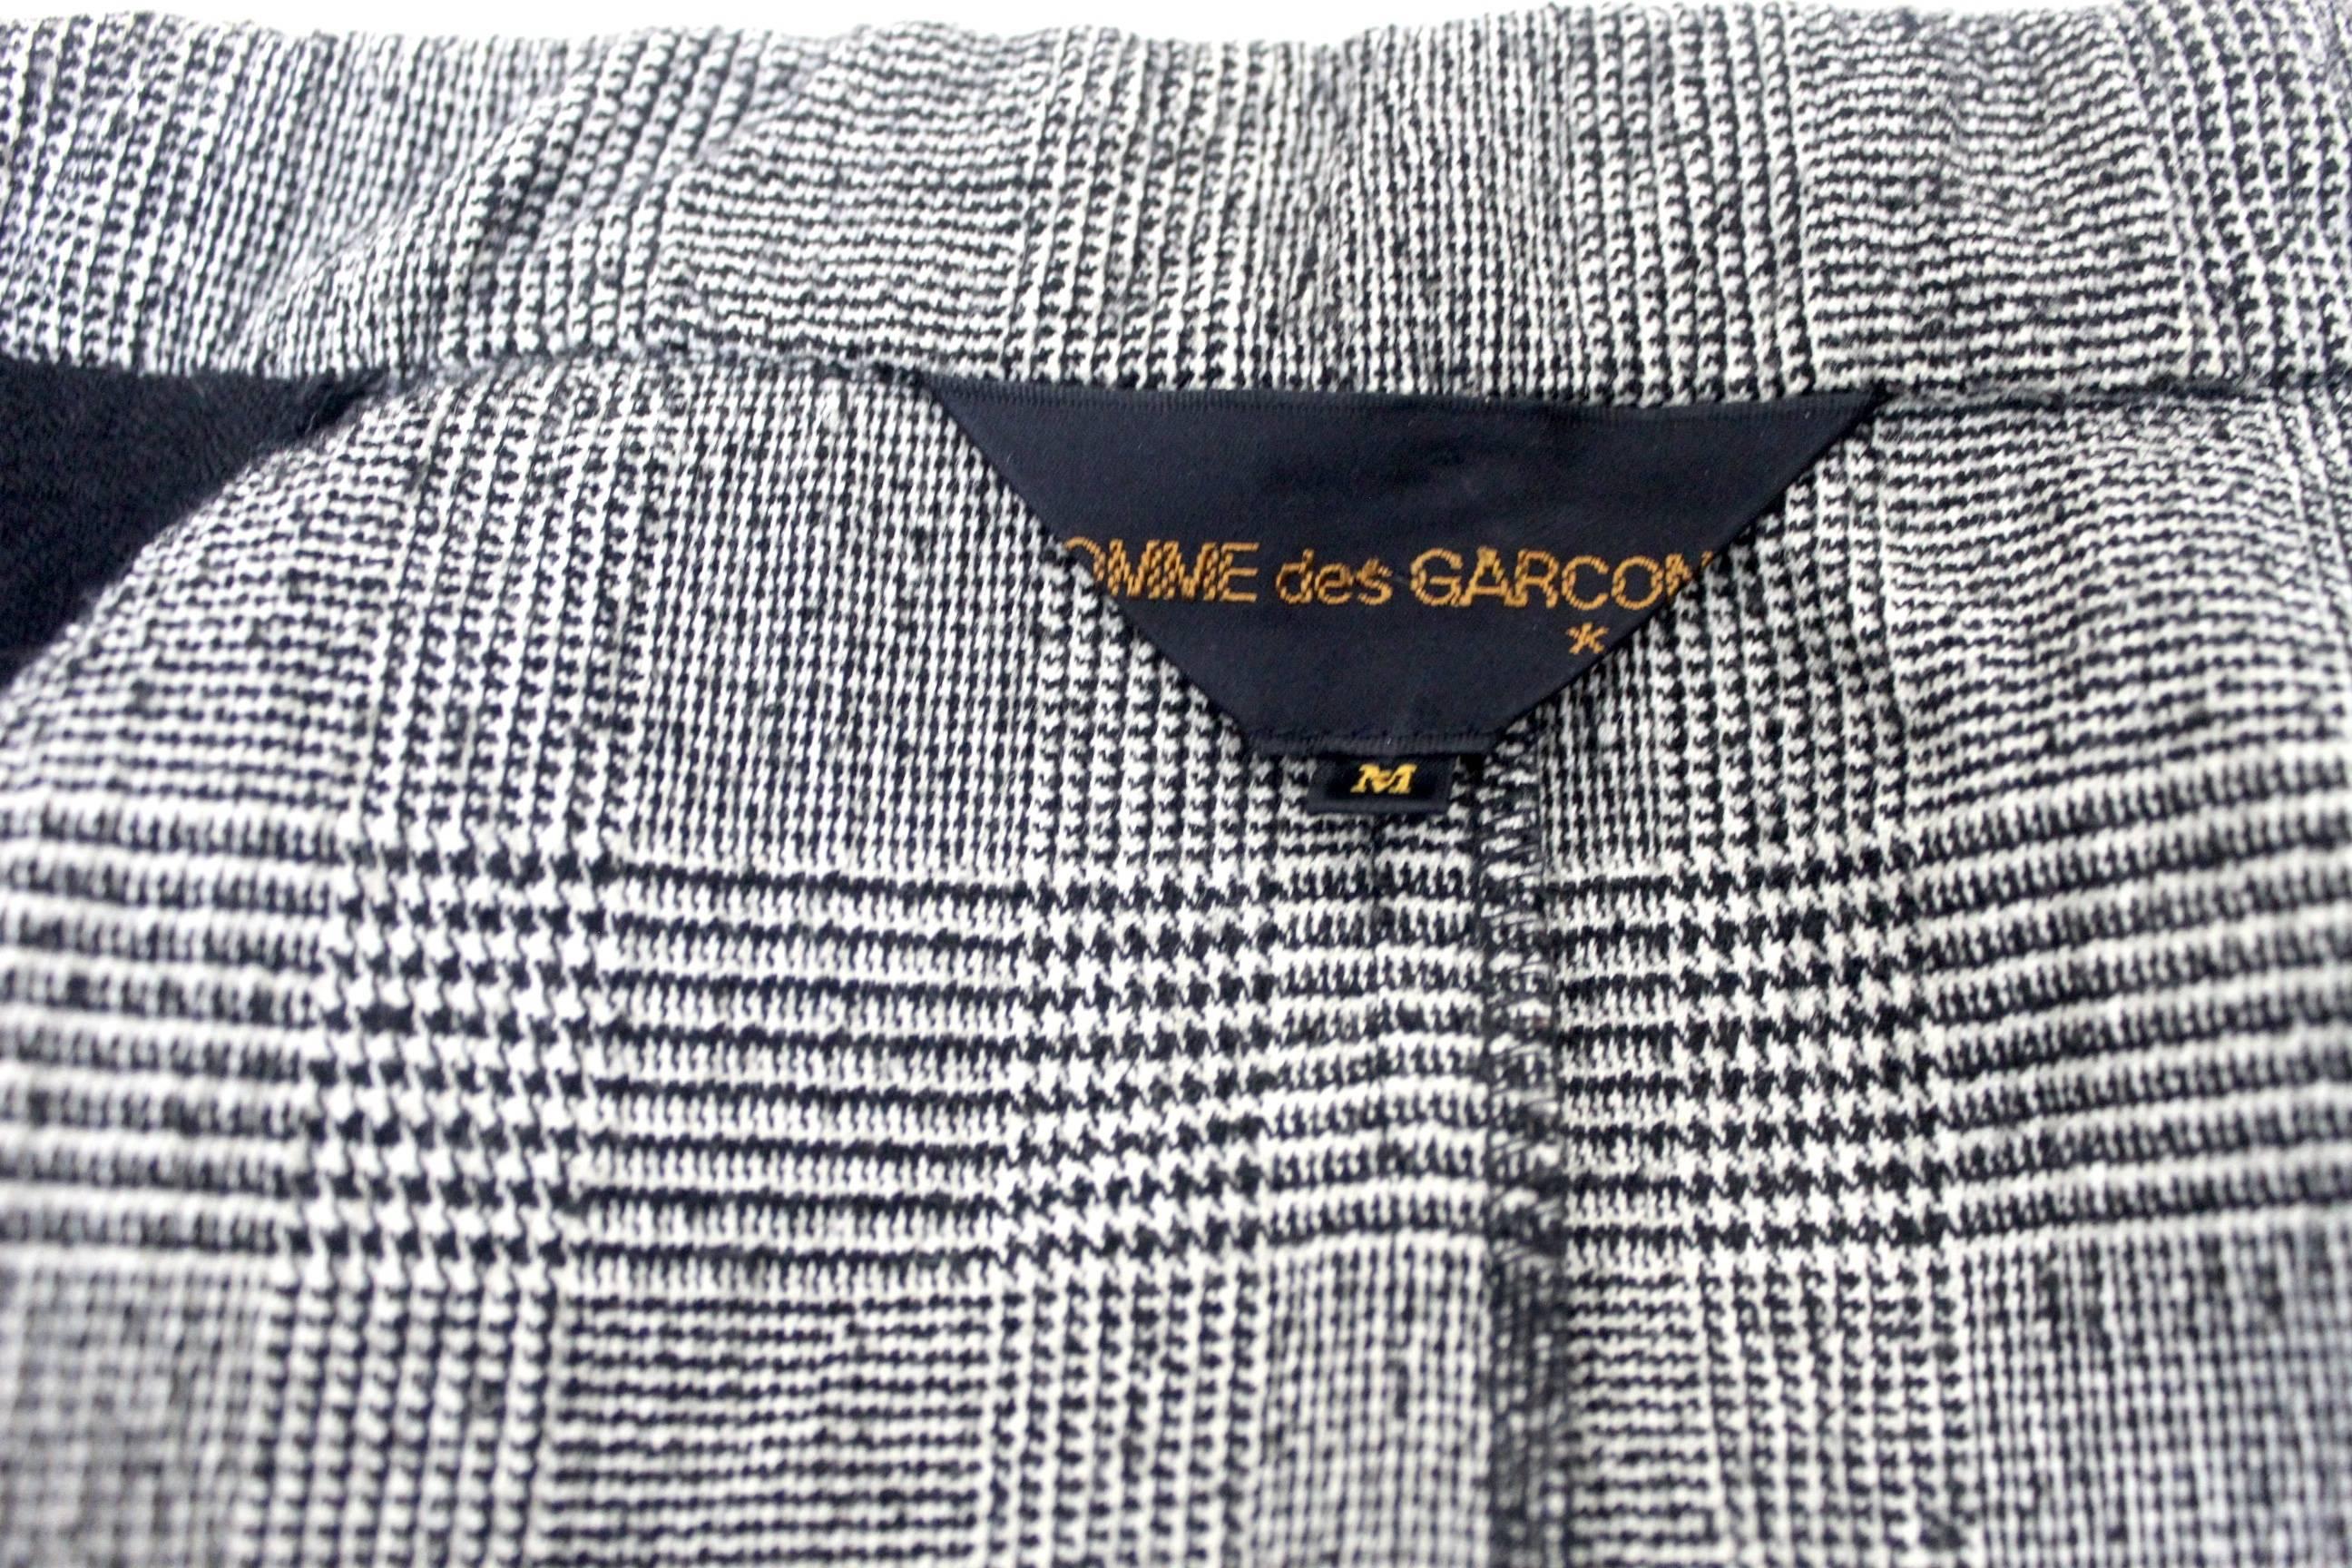 Comme des Garcons A/W 1986-87 Collection Jacket 4